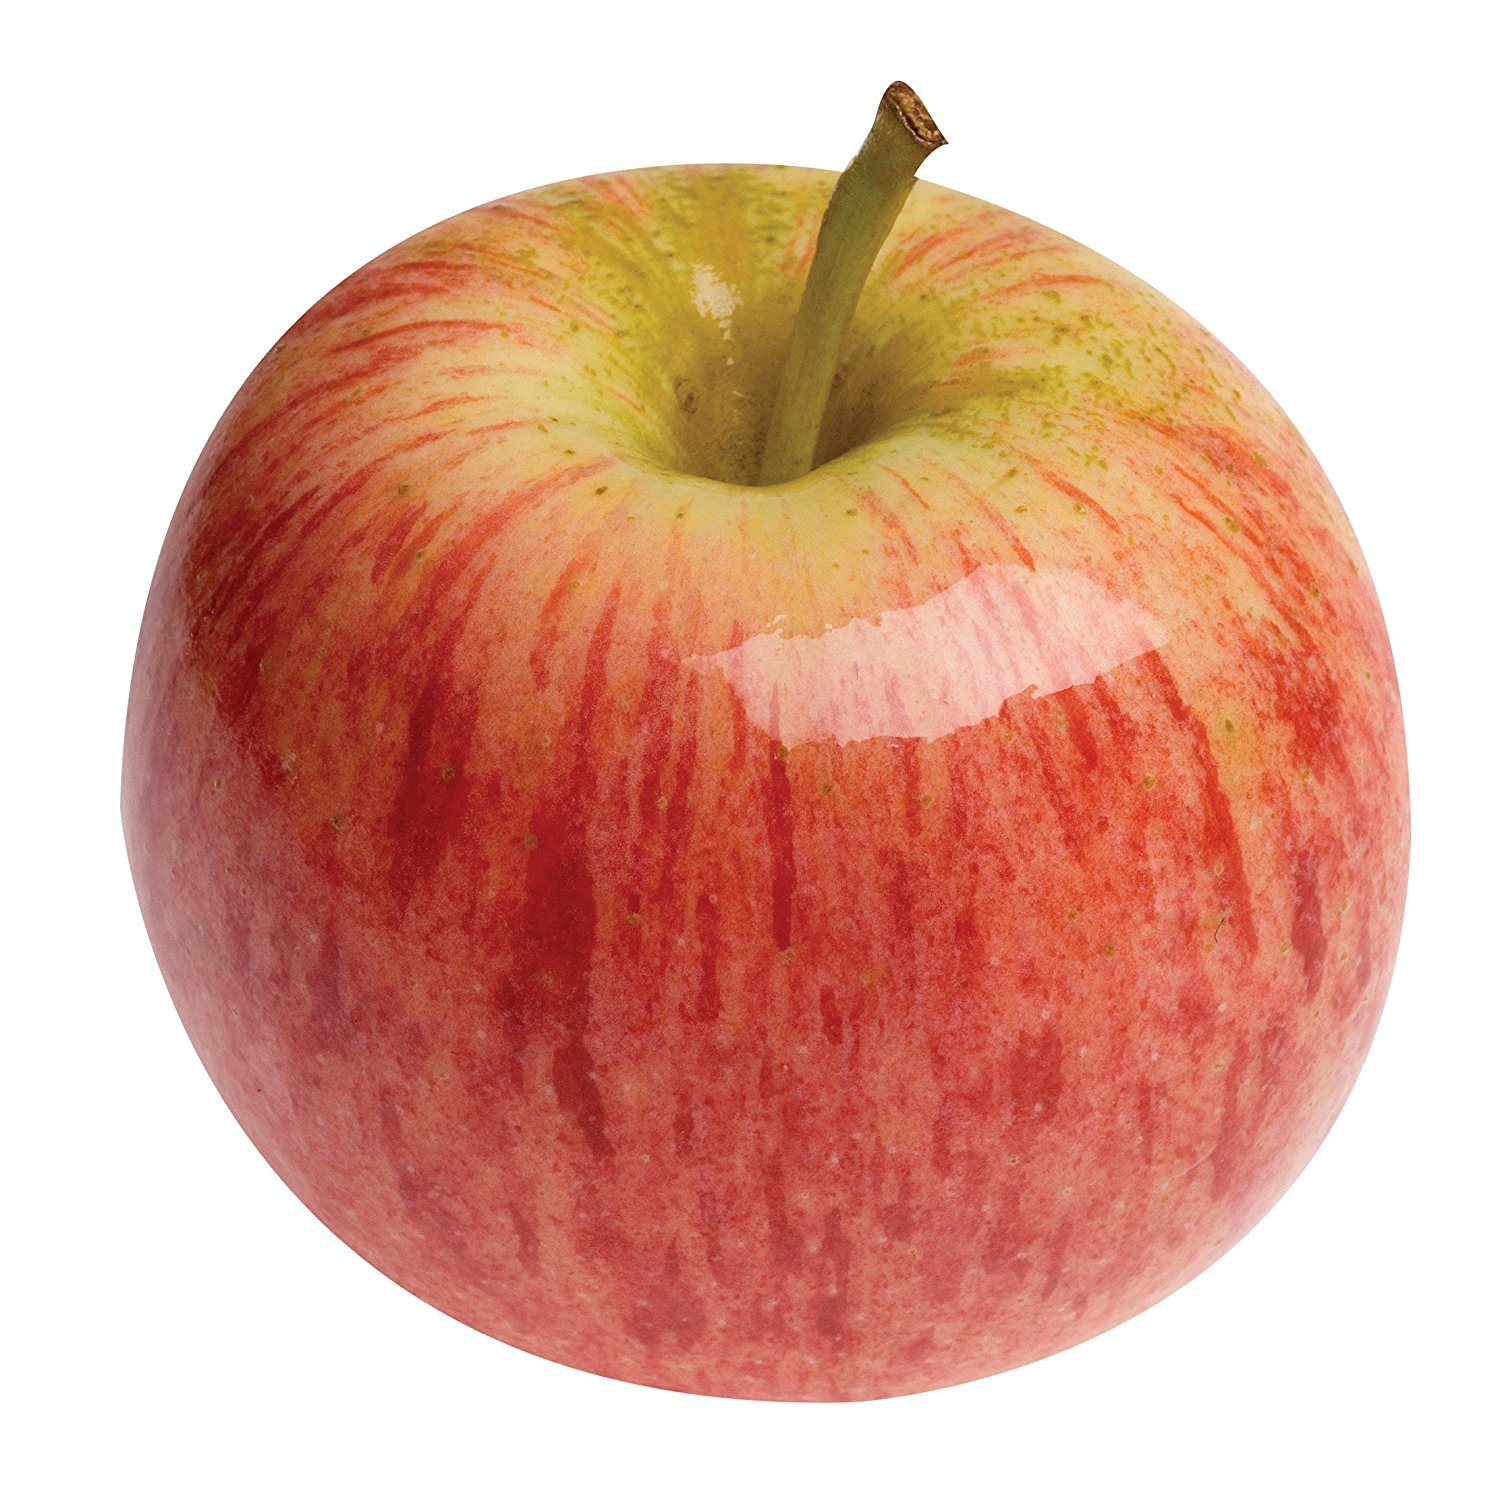 Gala Apples Fresh Produce Fruit, 3 LB Bag: Amazon.com: Grocery ...